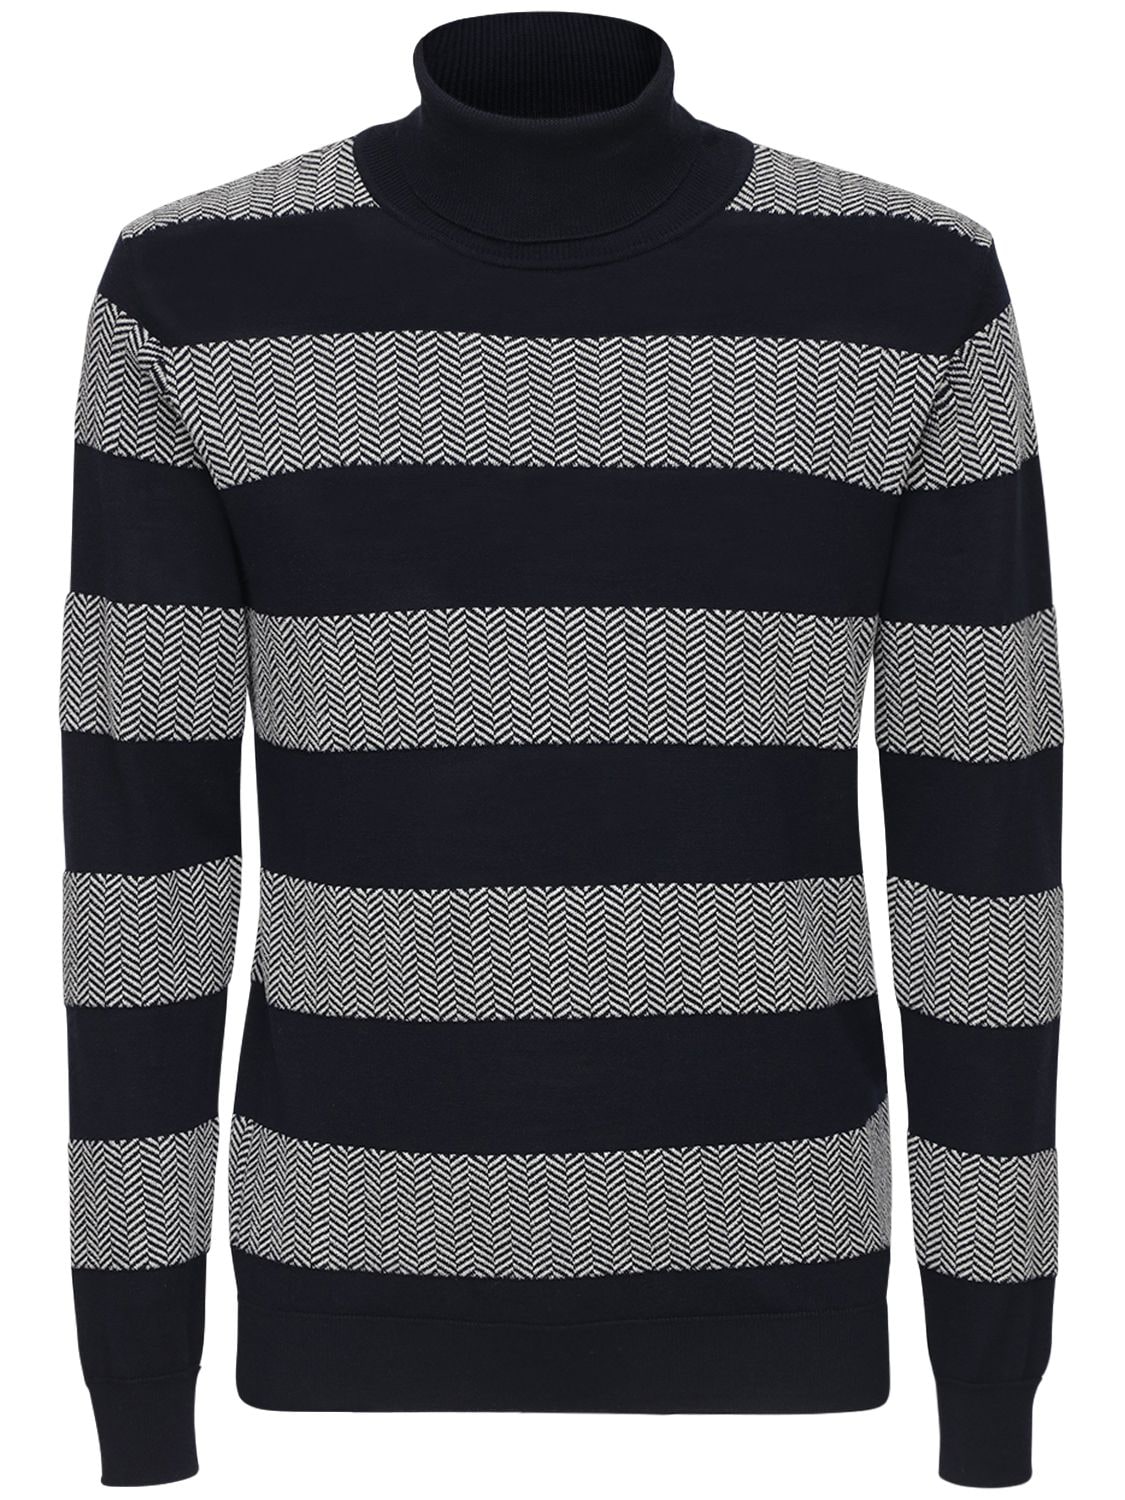 giorgio armani sweater